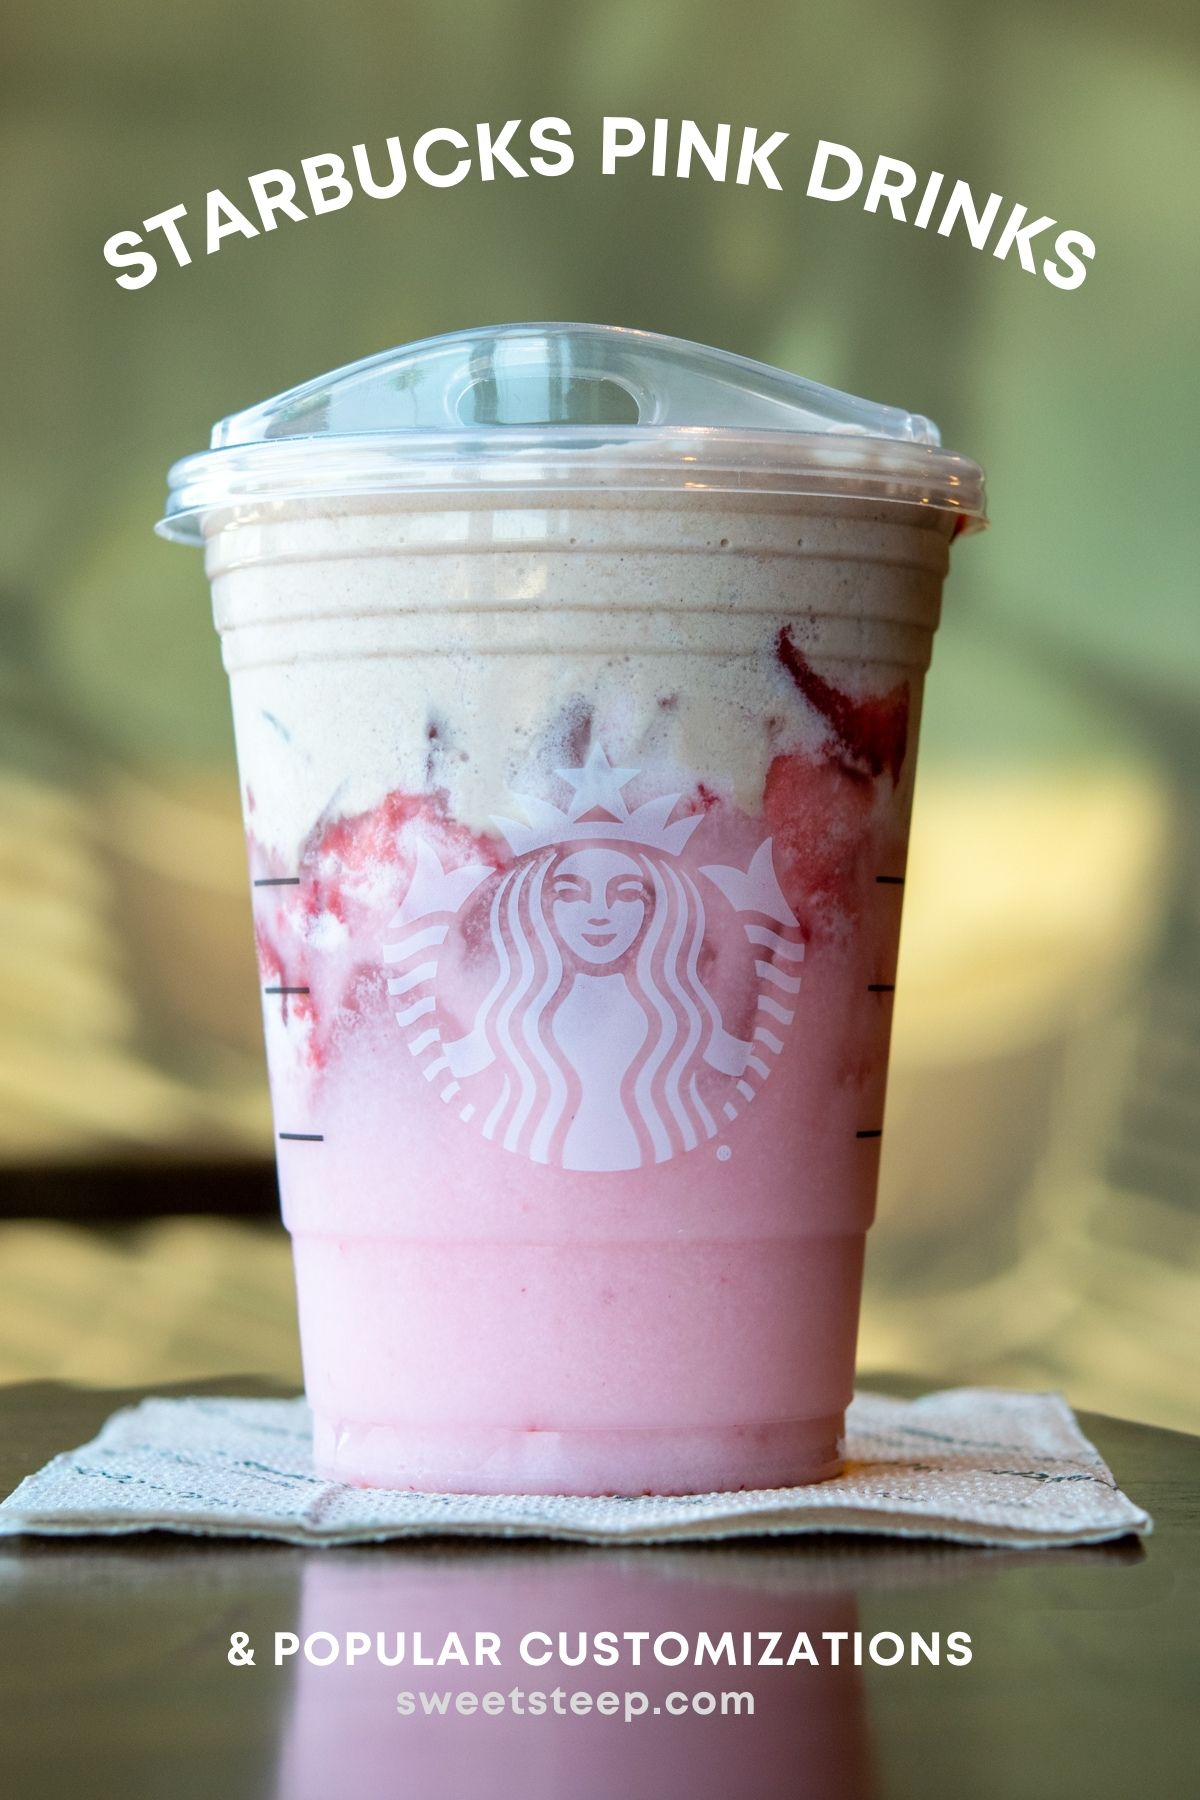 https://www.sweetsteep.com/wp-content/uploads/2022/06/starbucks-pink-drinks-customizations.jpg